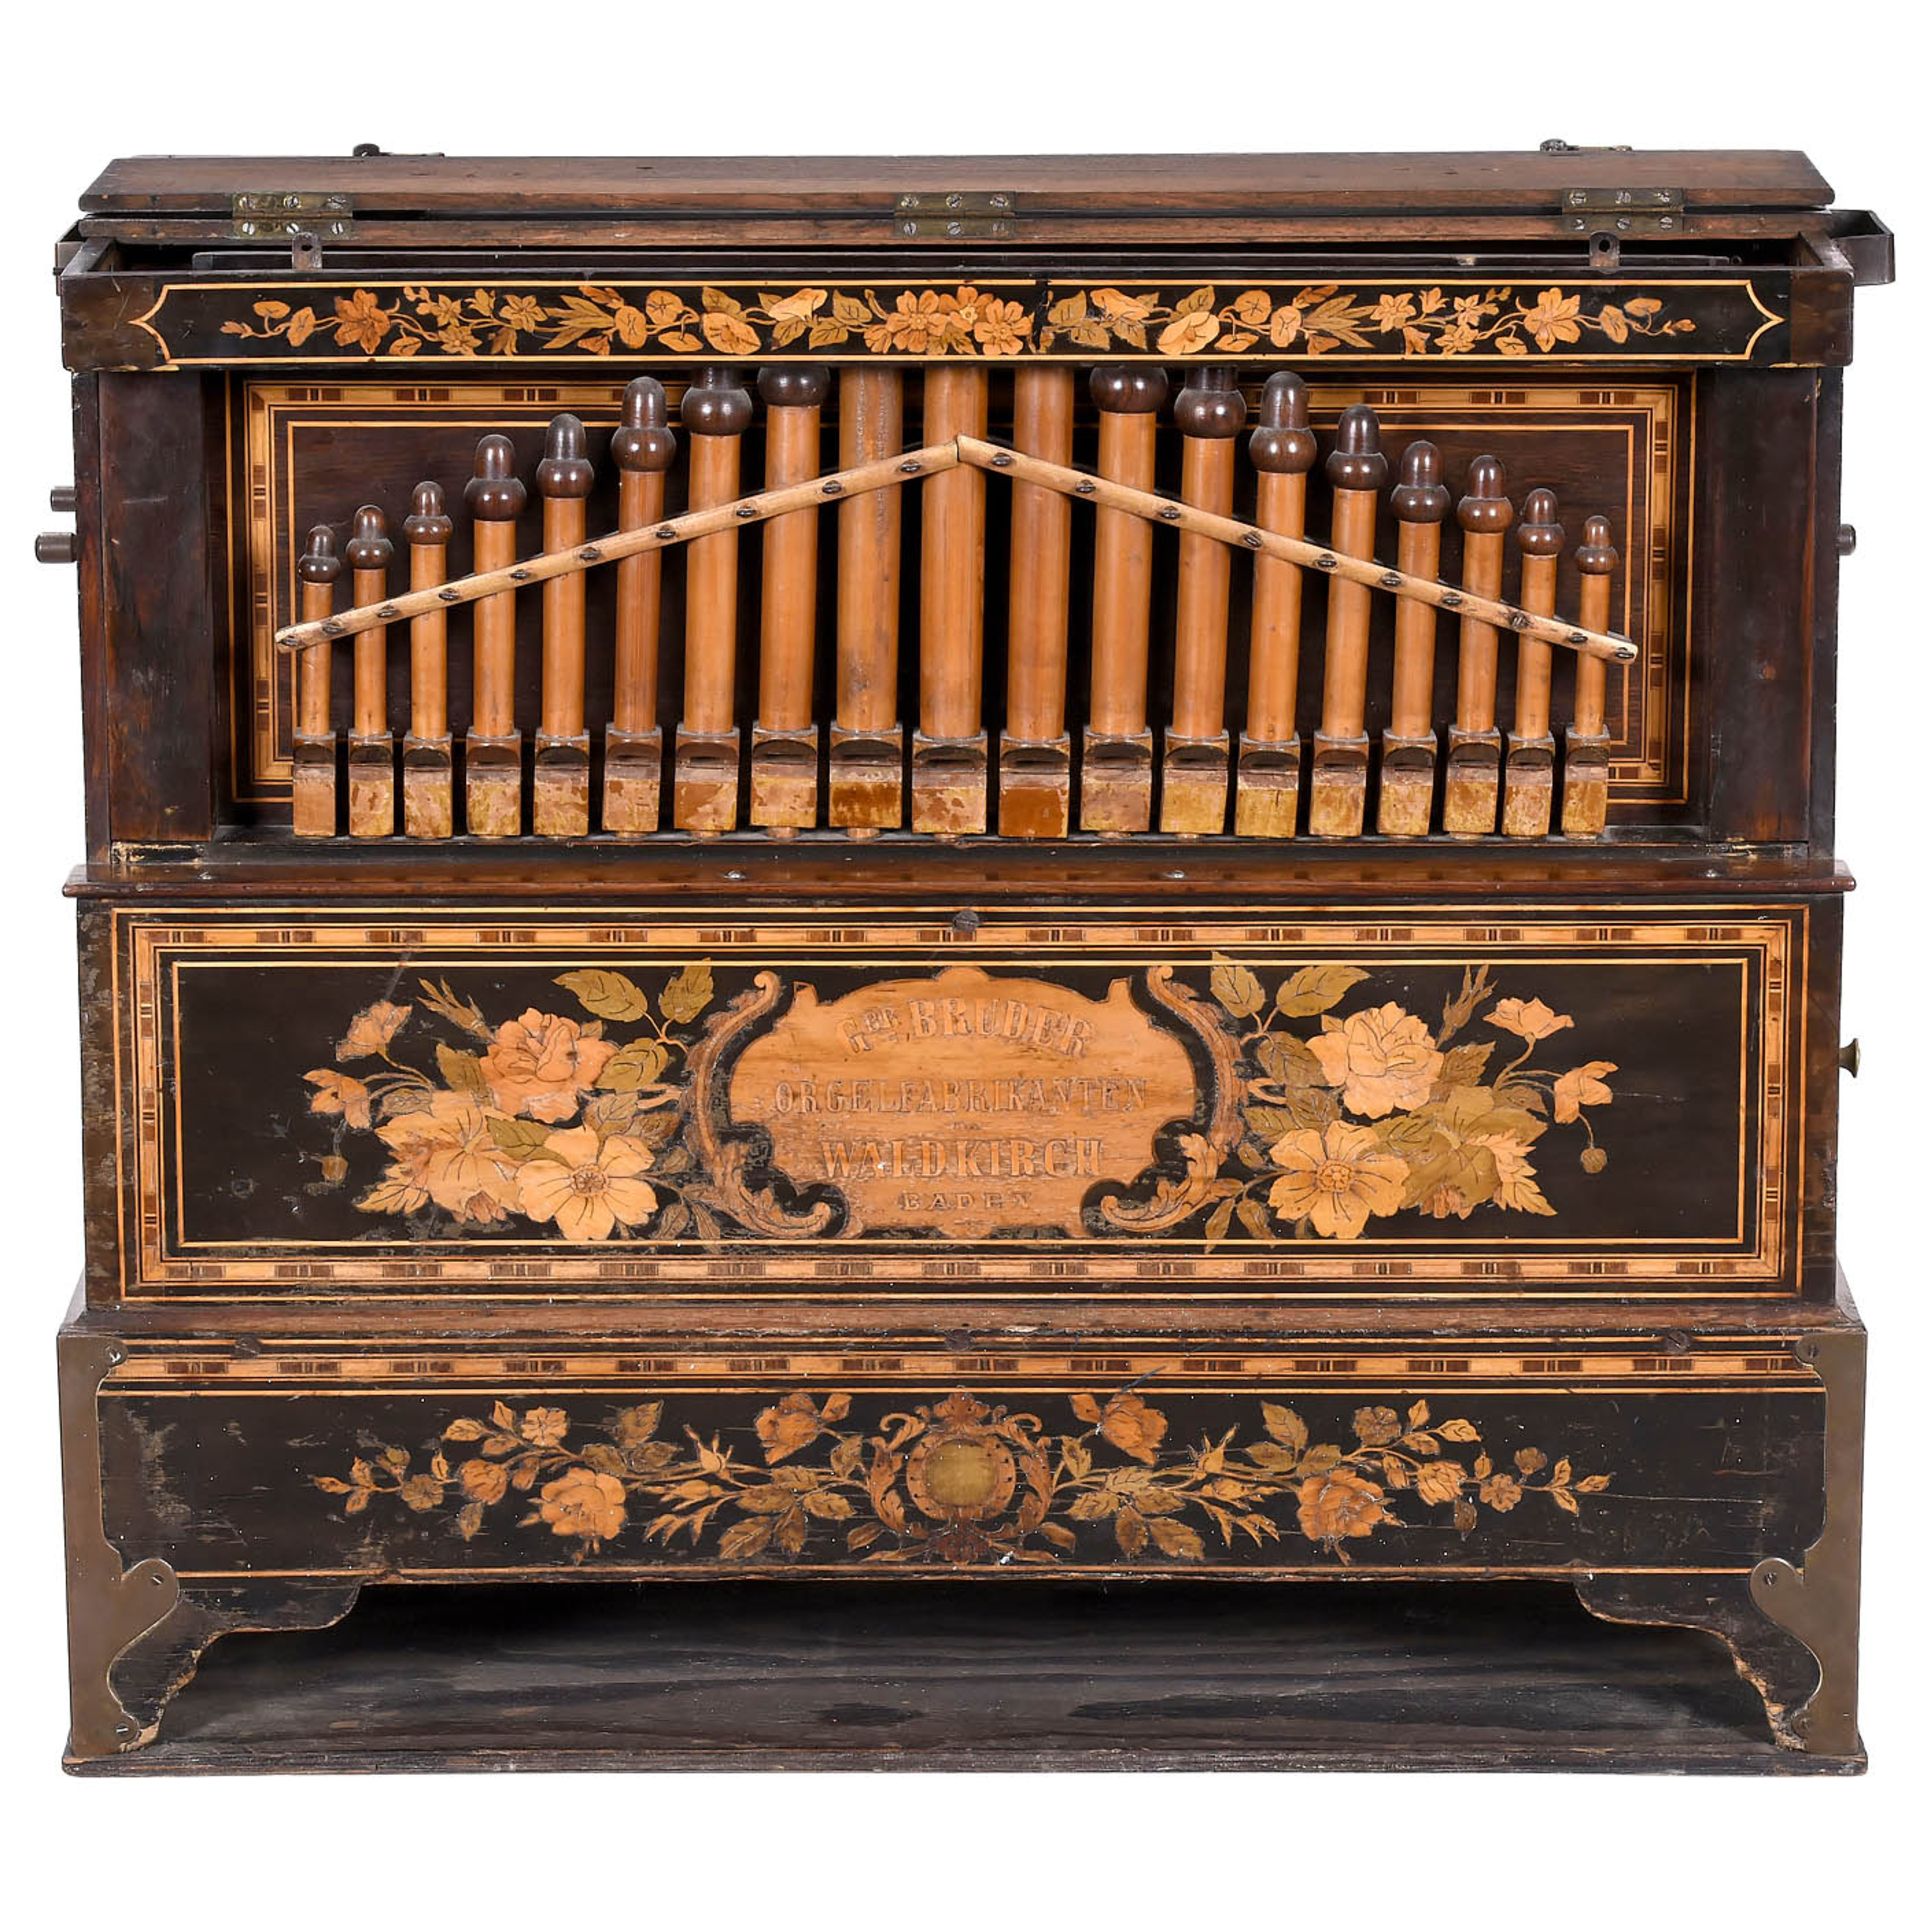 Early Street Barrel Organ by Bruder, c. 1890 - Image 2 of 5